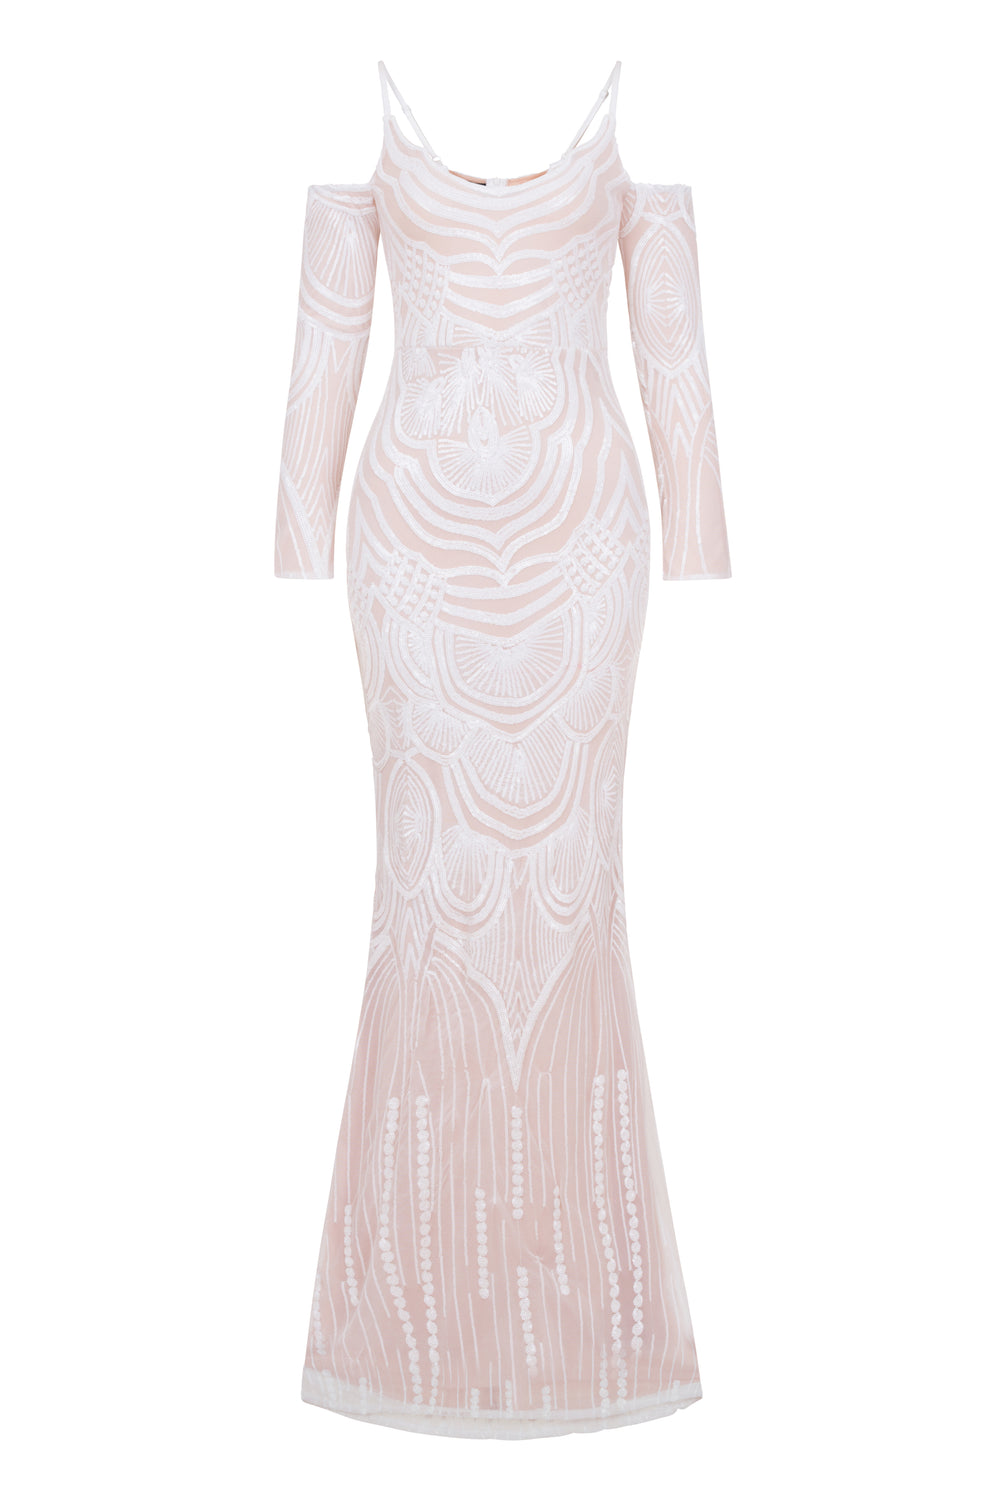 Vienna White Luxe Tribal Vip Illusion Sequin Mermaid Maxi Dress